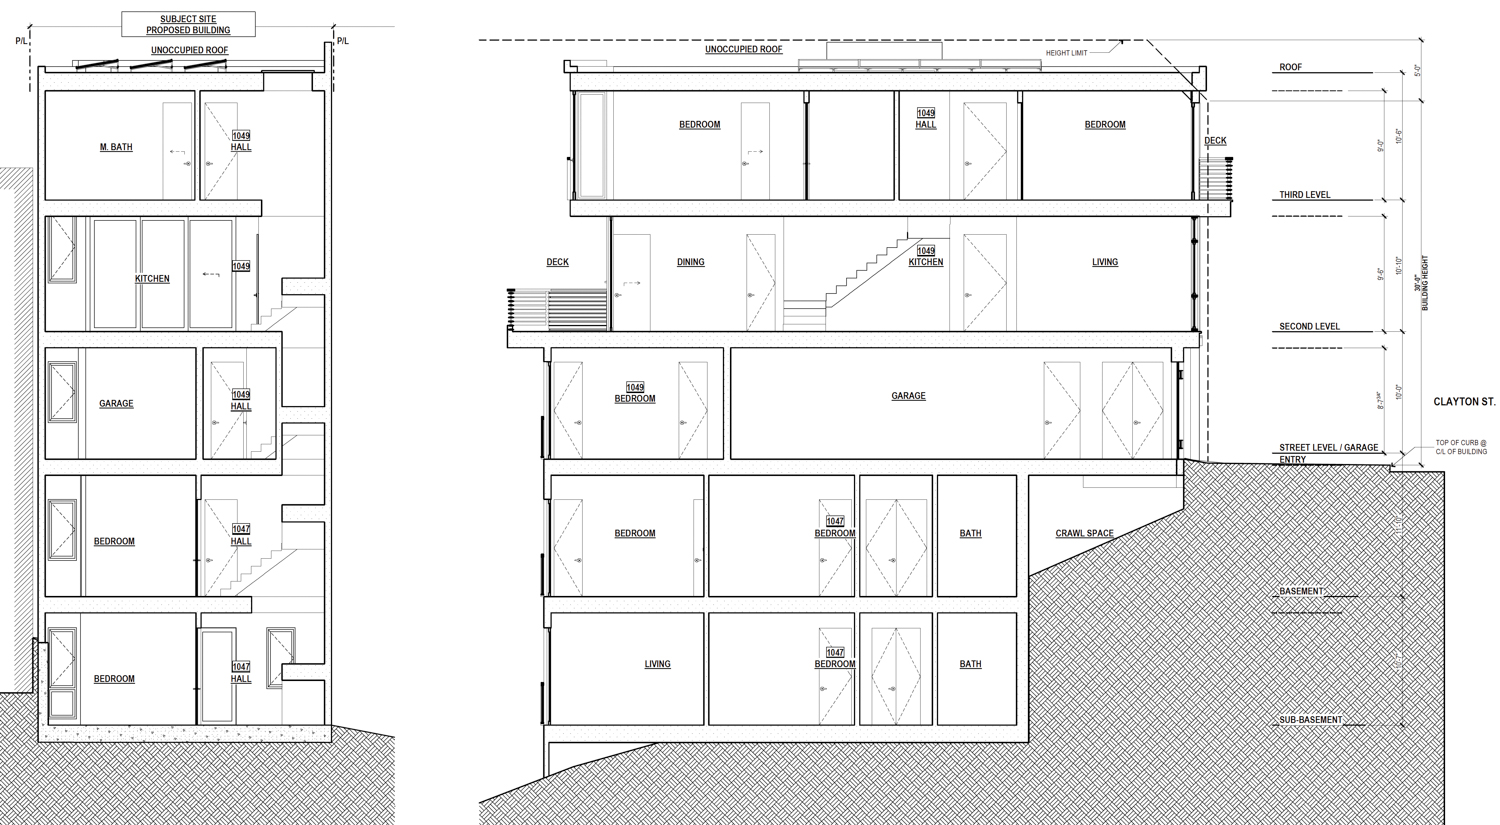 1047-49 Clayton Street vertical cross-section, illustration by Schaub Li Architects